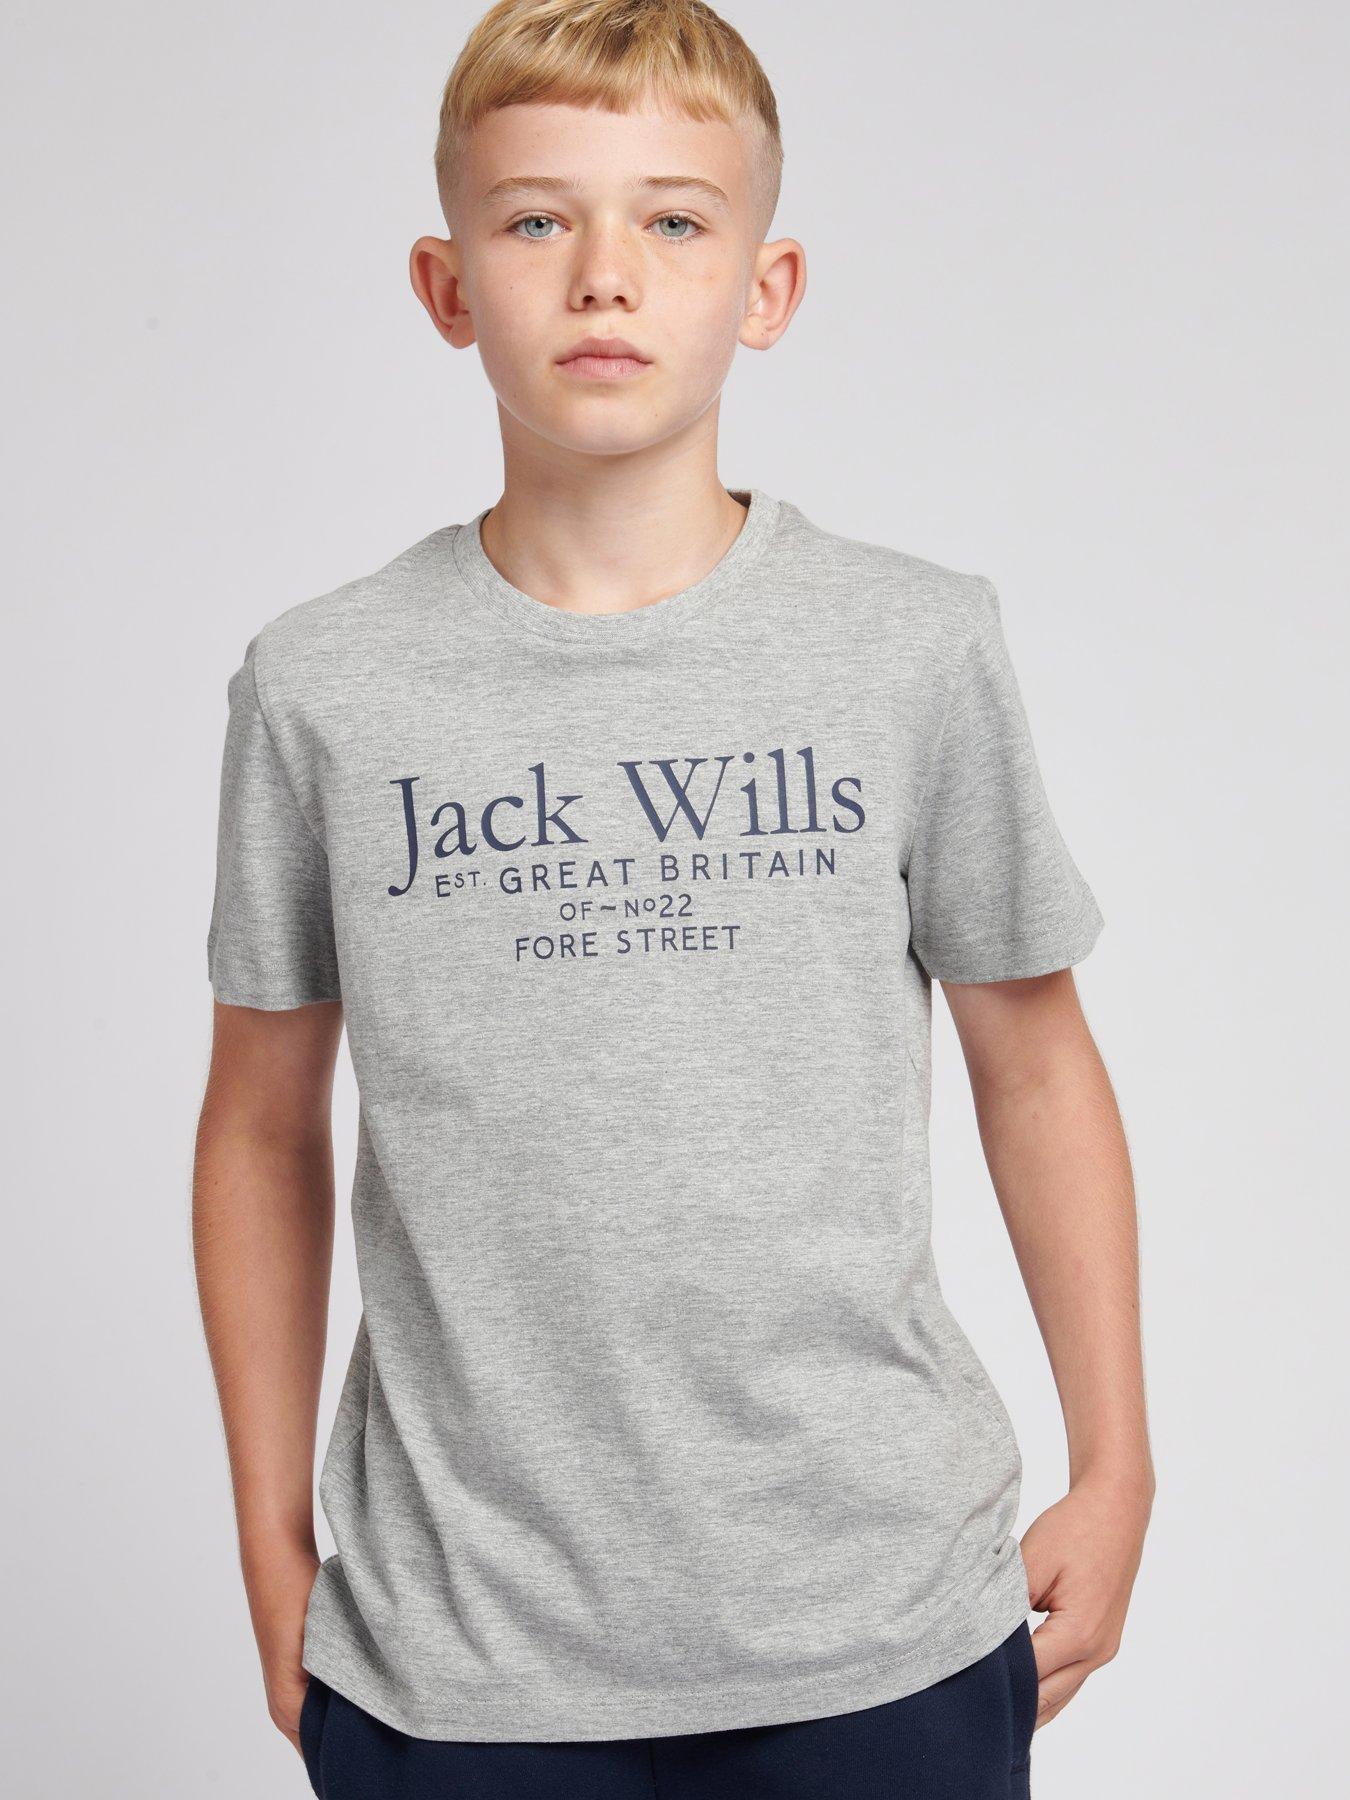 Jack Wills, Jack Wills Stockist UK